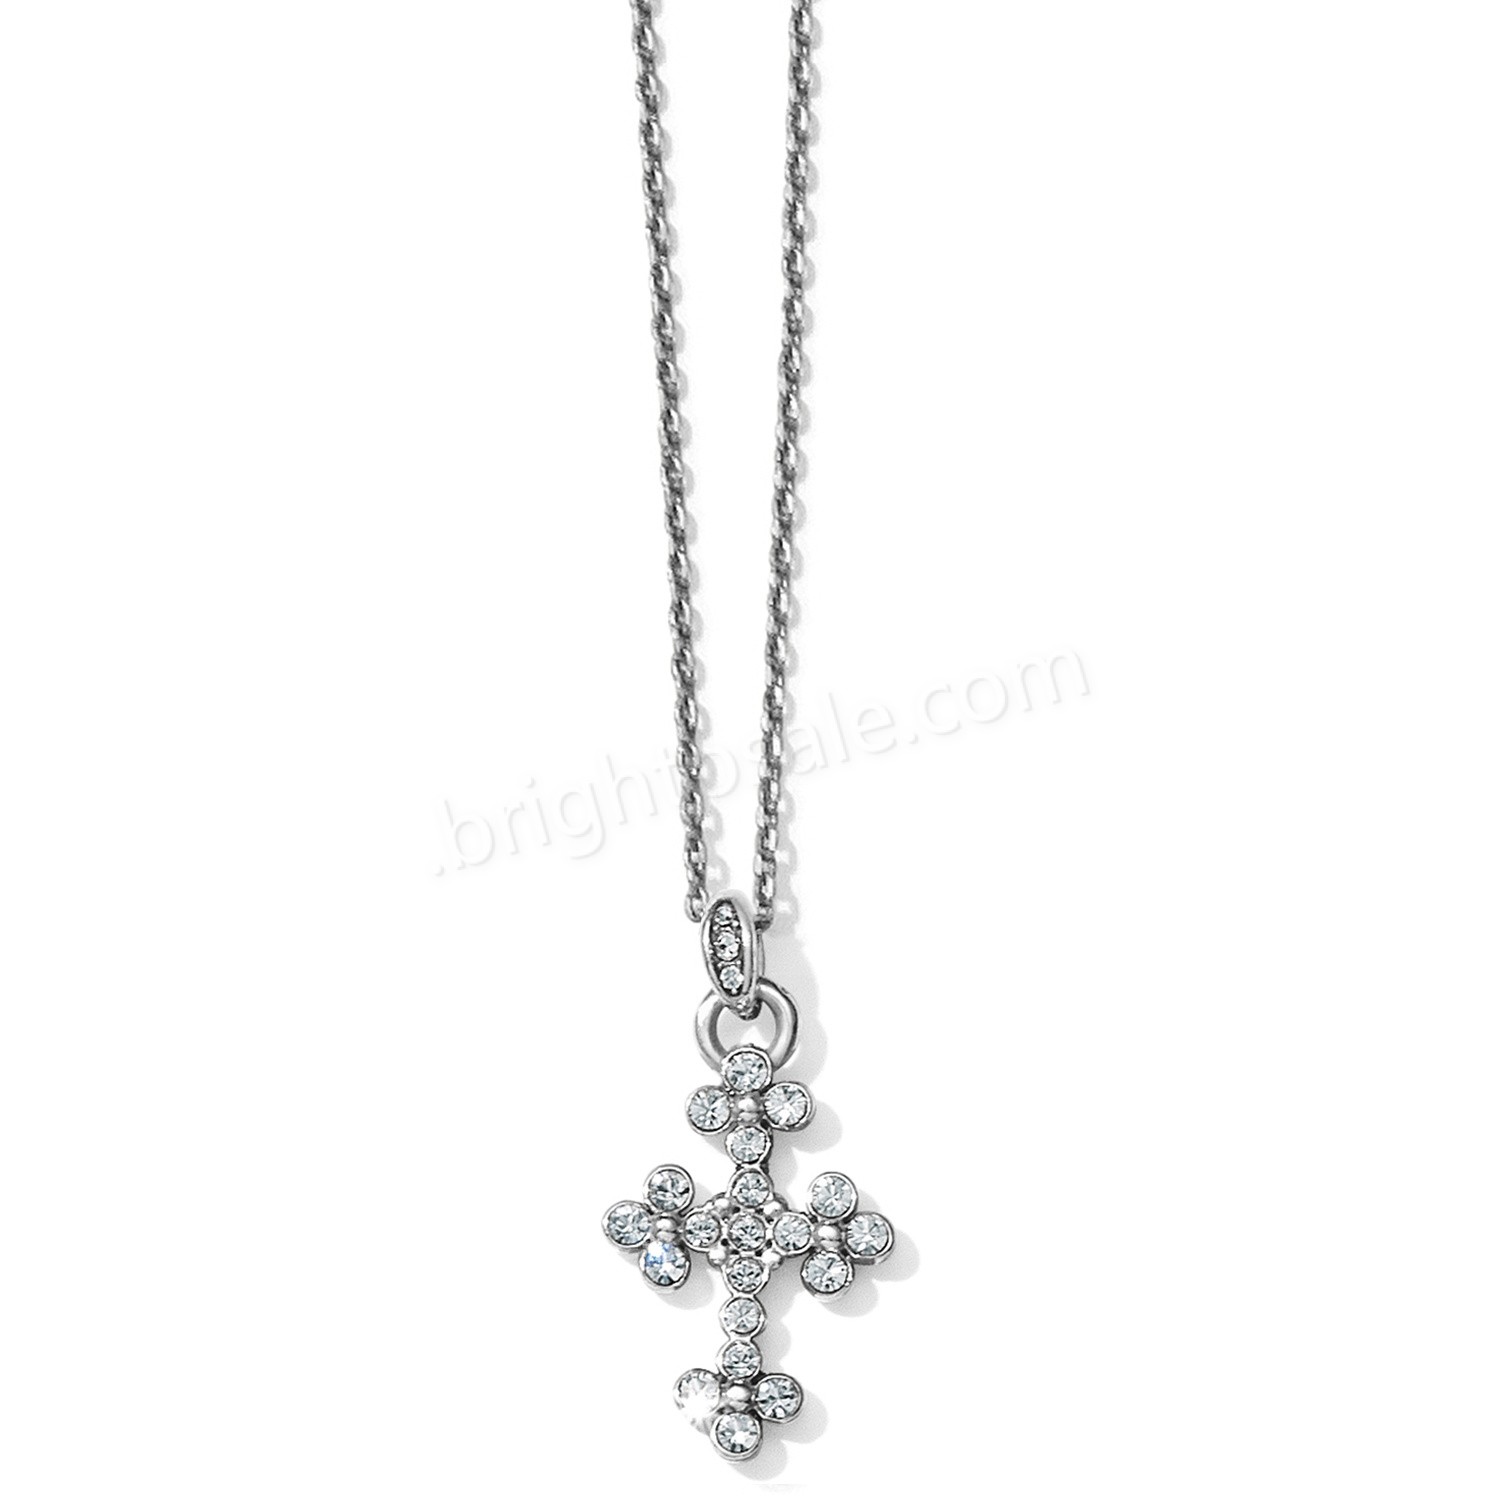 Brighton Collectibles & Online Discount Abbey Cross Necklace - Brighton Collectibles & Online Discount Abbey Cross Necklace